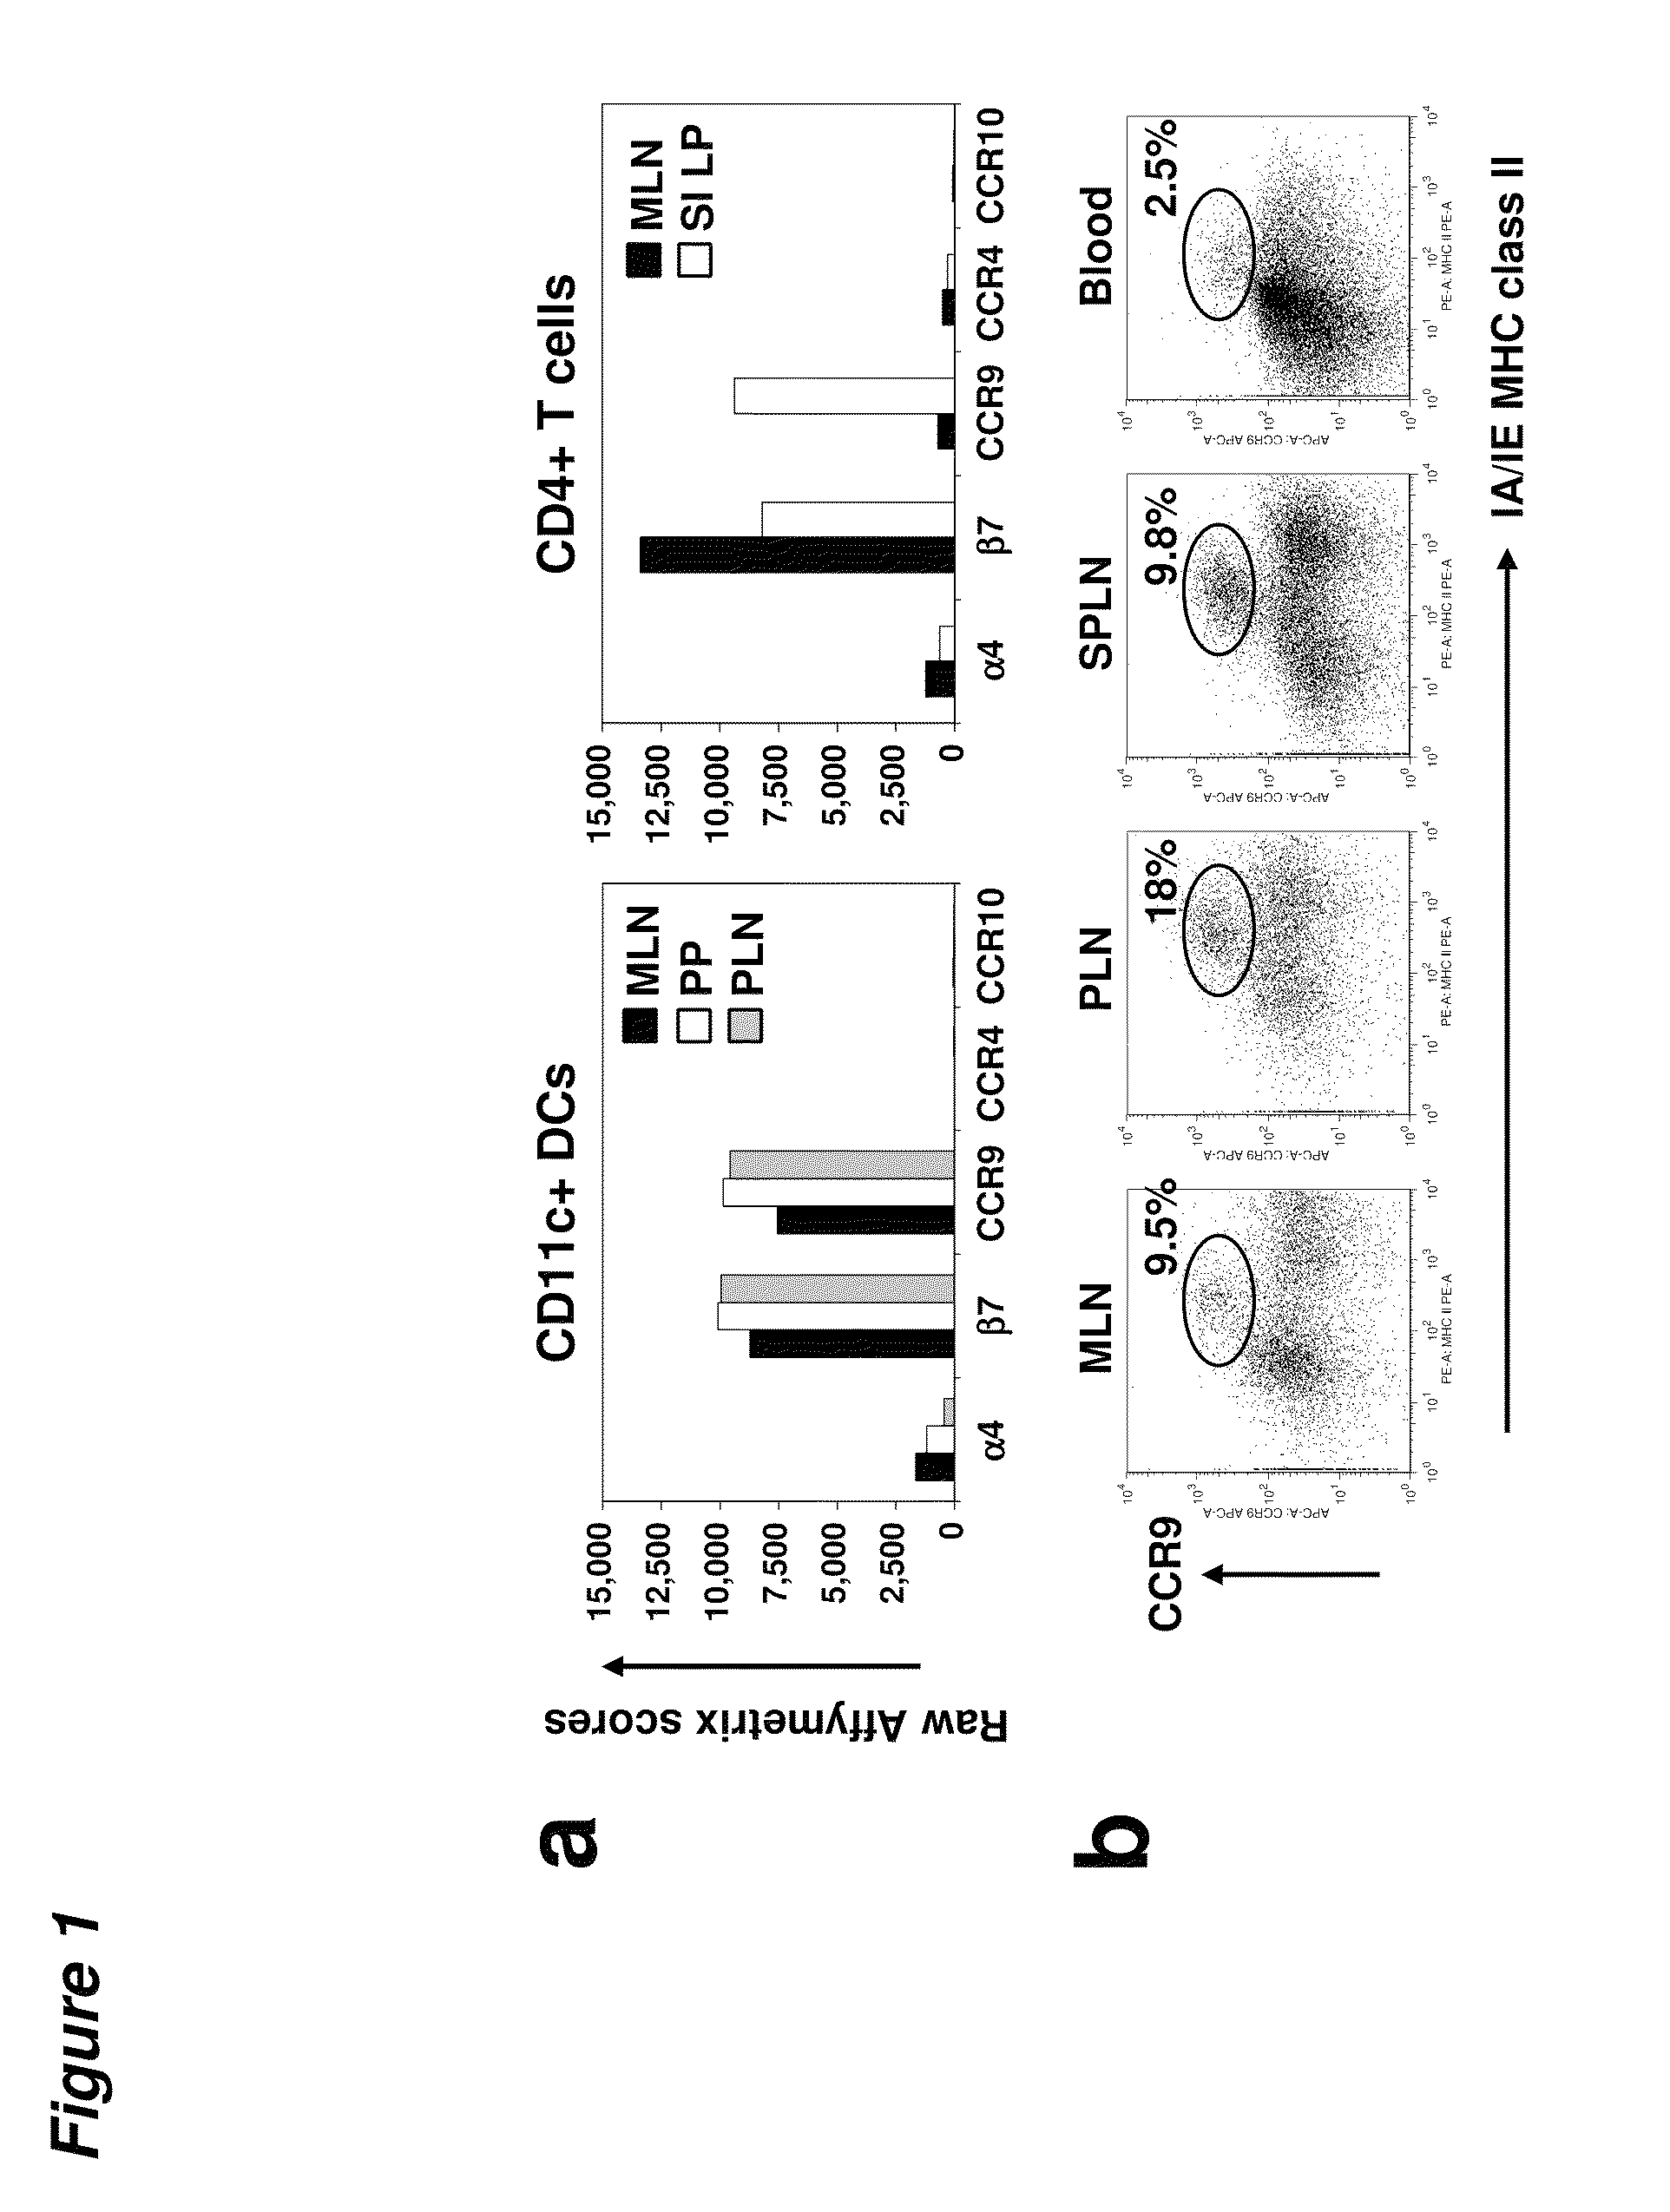 Tolerogenic populations of dendritic cells